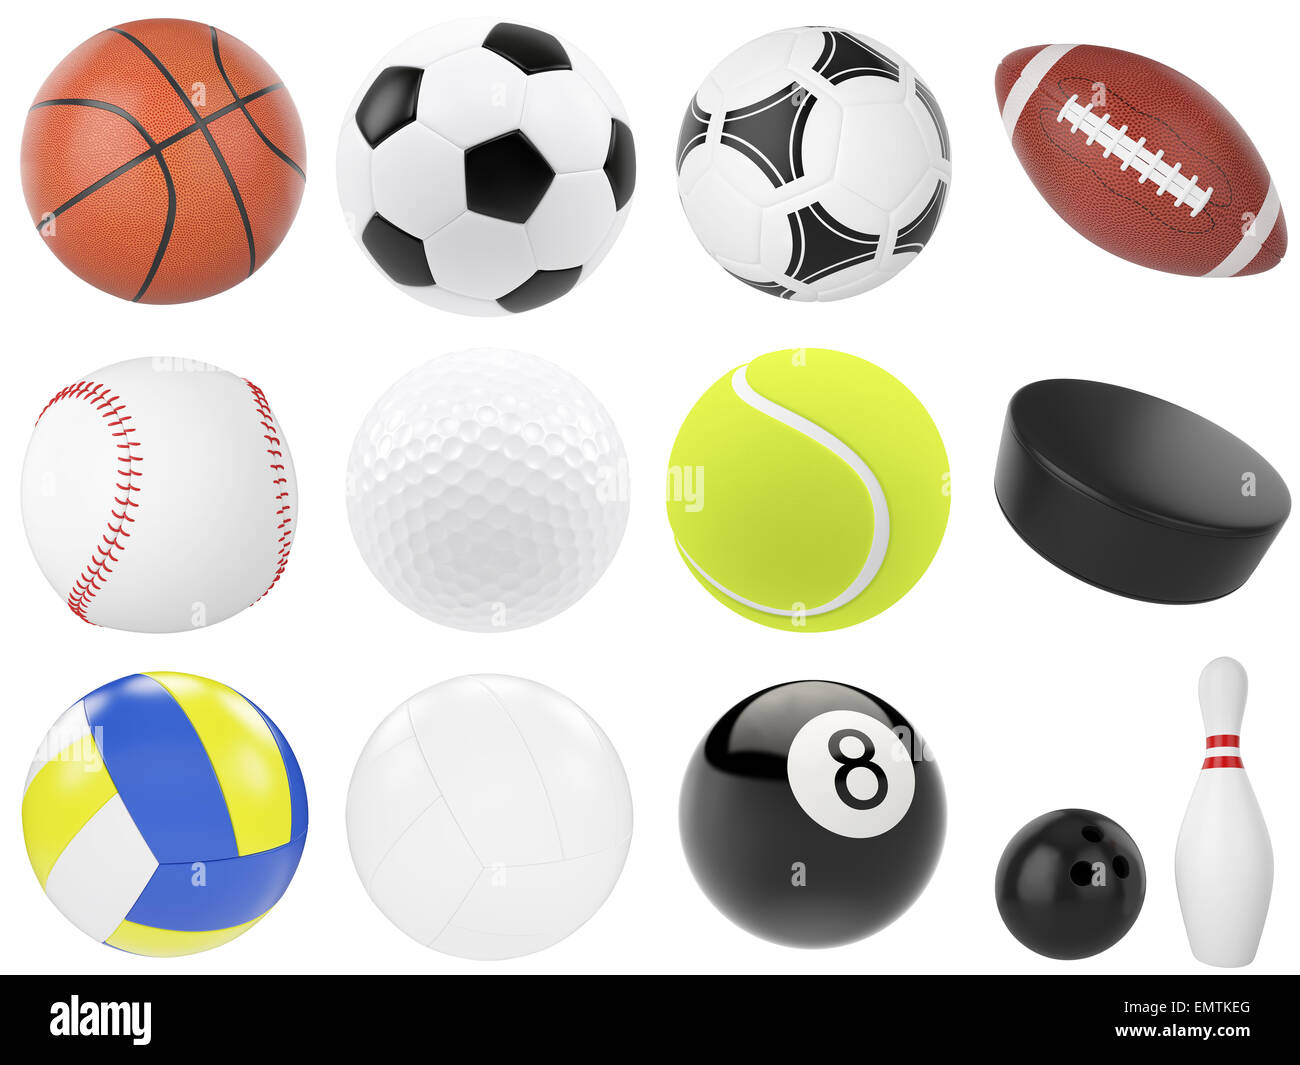 Ensemble de ballons de sport, football, basket-ball, pétanque, rugby, tennis, volley-ball, le hockey, le base-ball, billard, golf, puck. Banque D'Images